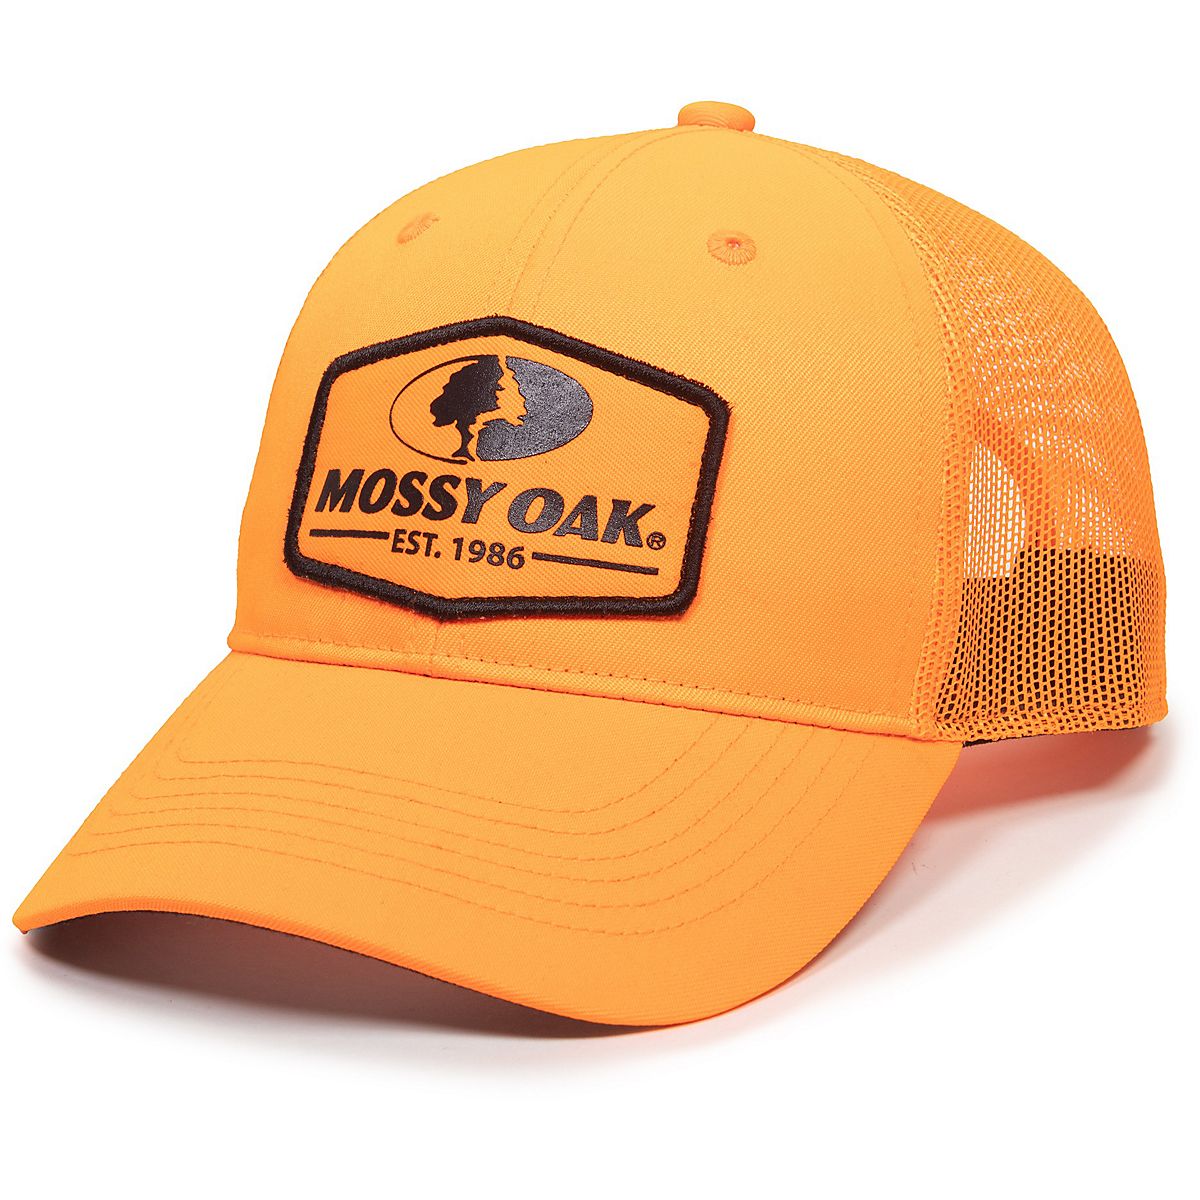 Outdoor Cap OCG-004 BLAZE ORANGE Men's Blaze Orange Boonie Hat One Size 